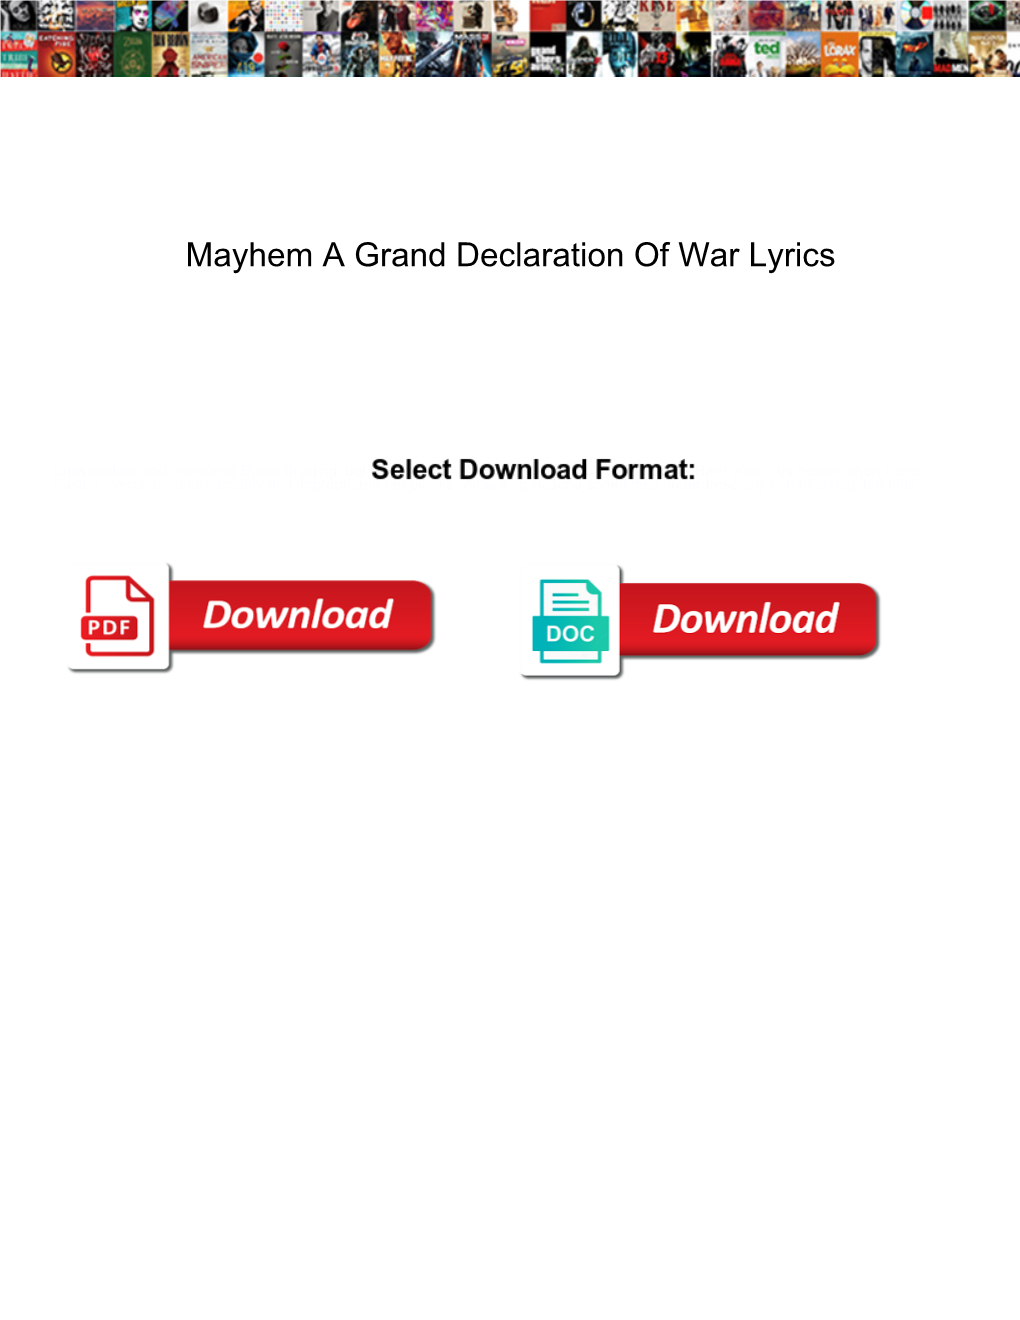 Mayhem a Grand Declaration of War Lyrics